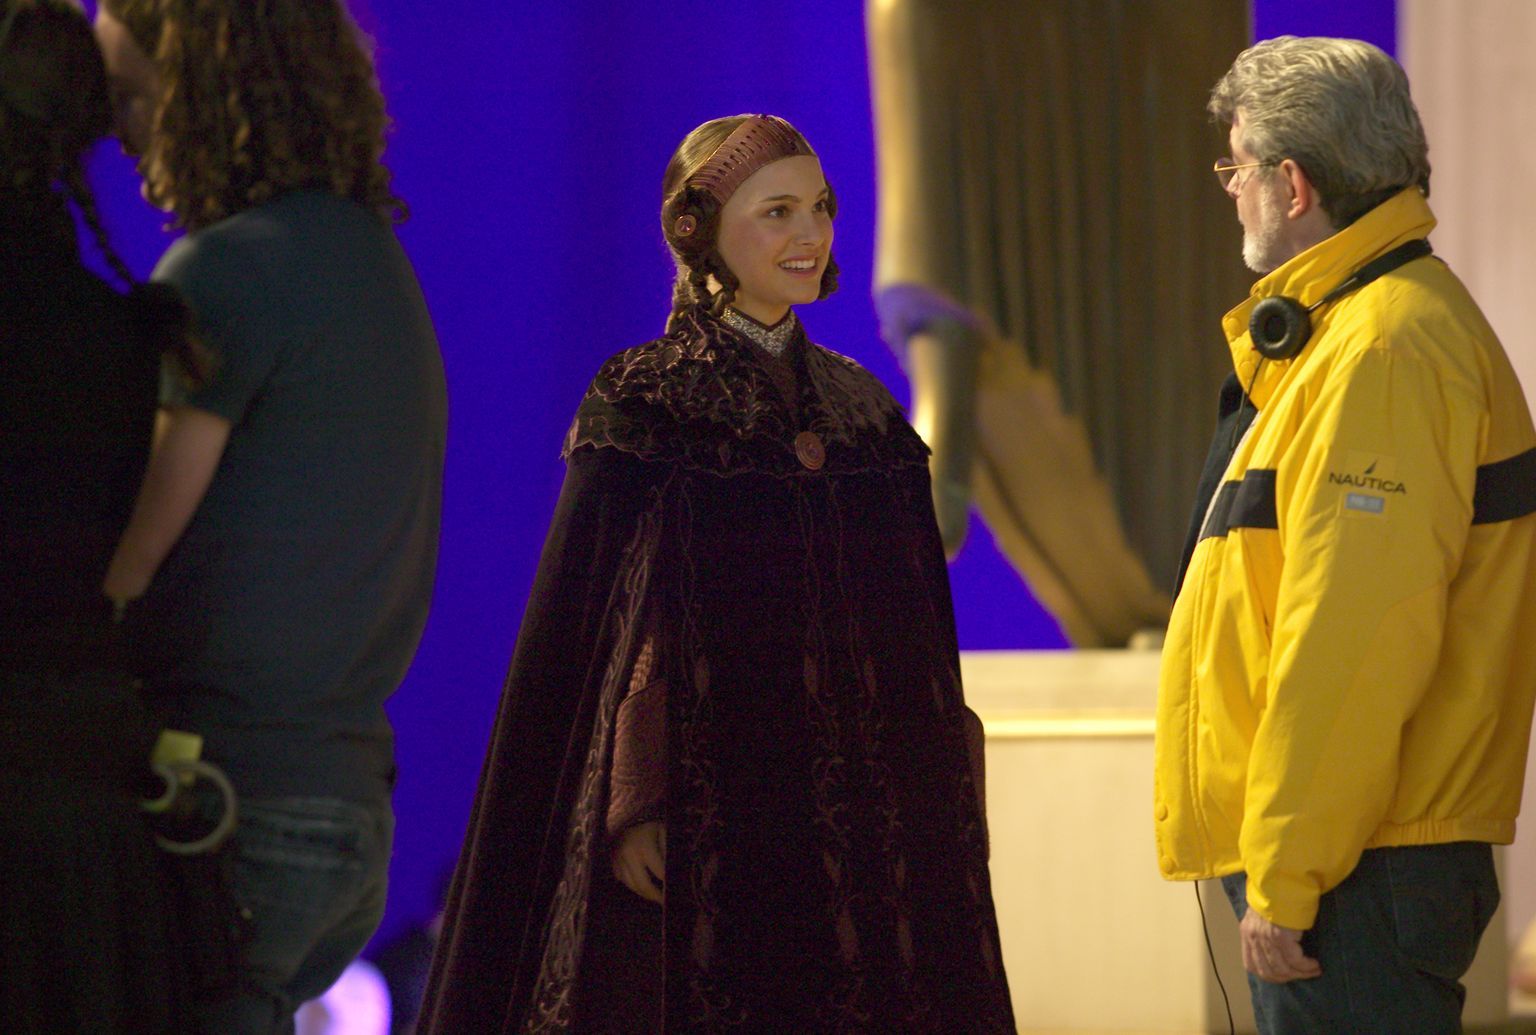 George Lucas and Natalie Portman in Zvaigzdziu karai. Situ kerstas (2005)